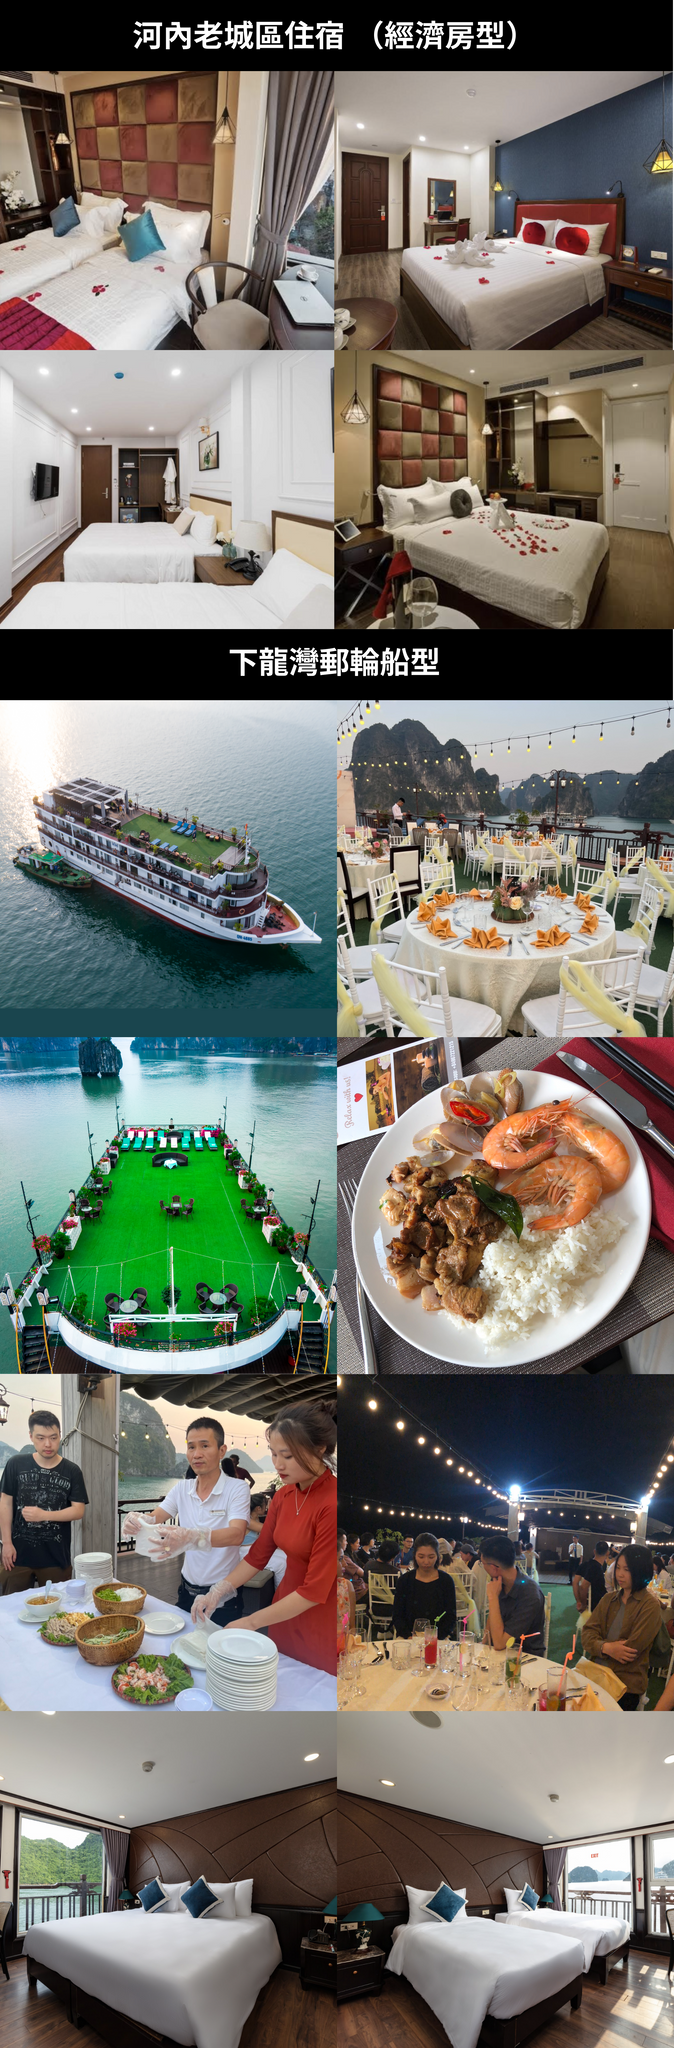 outo-hanoi-ha-stay-long-bay-cruise-economic